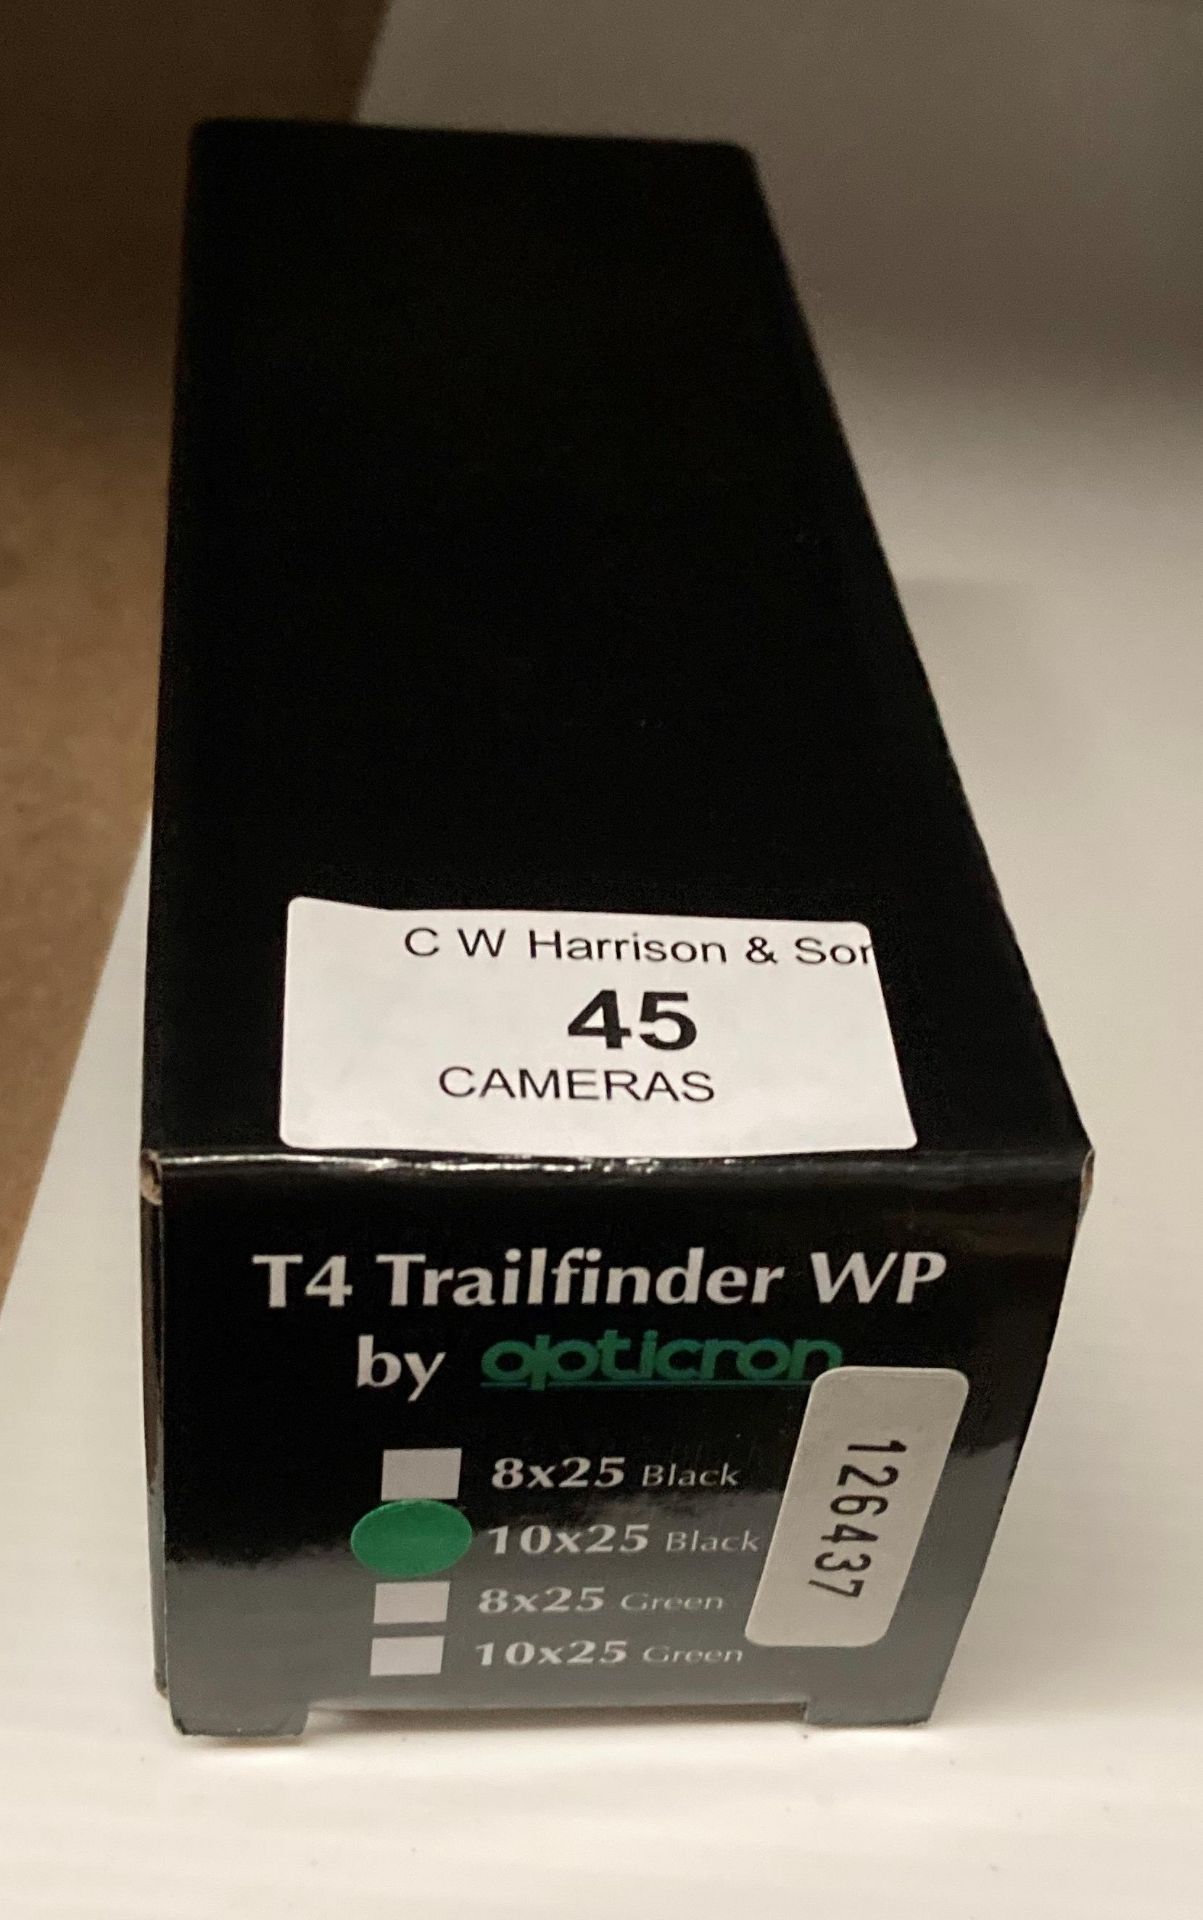 Opticron T4 Trailfinder WP monocular 10 x 25 (new boxed) (saleroom location: QL05) - Image 2 of 2